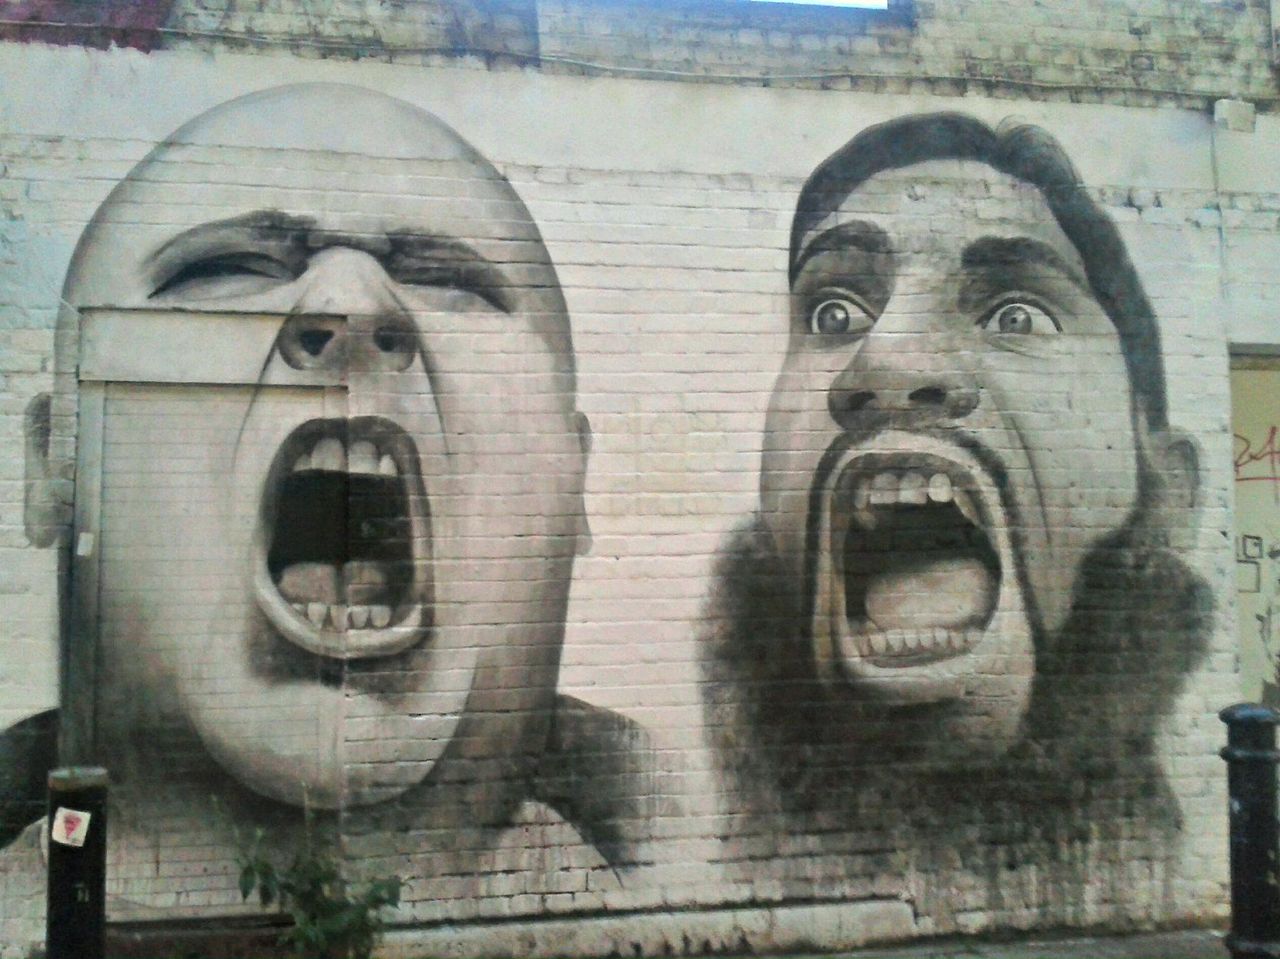 Graffiti in Shoreditch, London - Hatred by Ben Slow (9422248989).jpg